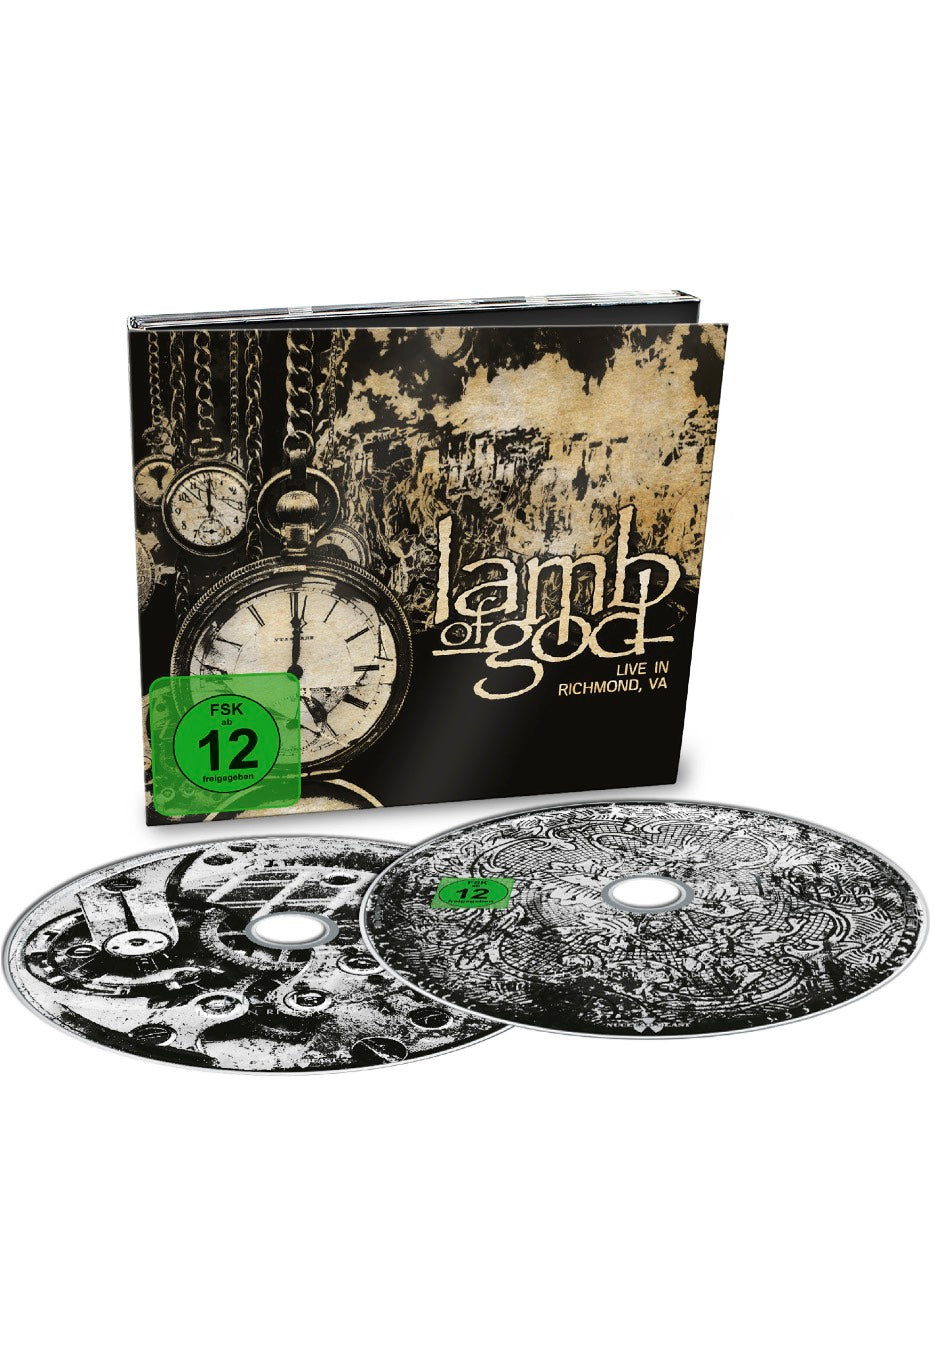 Lamb Of God - Live In Richmond, VA - Digipak CD + DVD